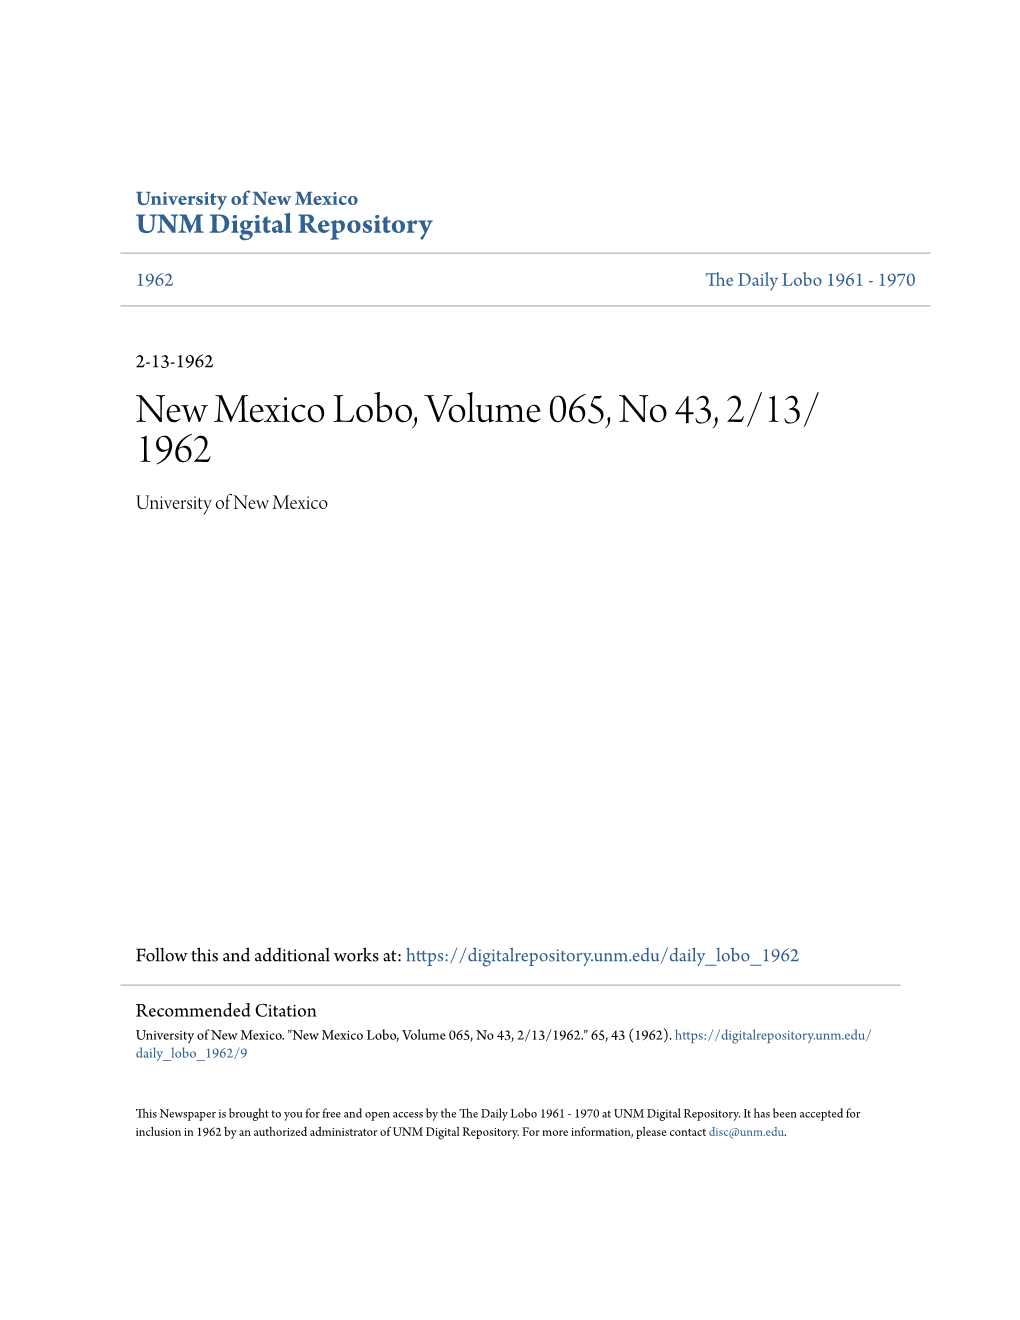 New Mexico Lobo, Volume 065, No 43, 2/13/1962." 65, 43 (1962)